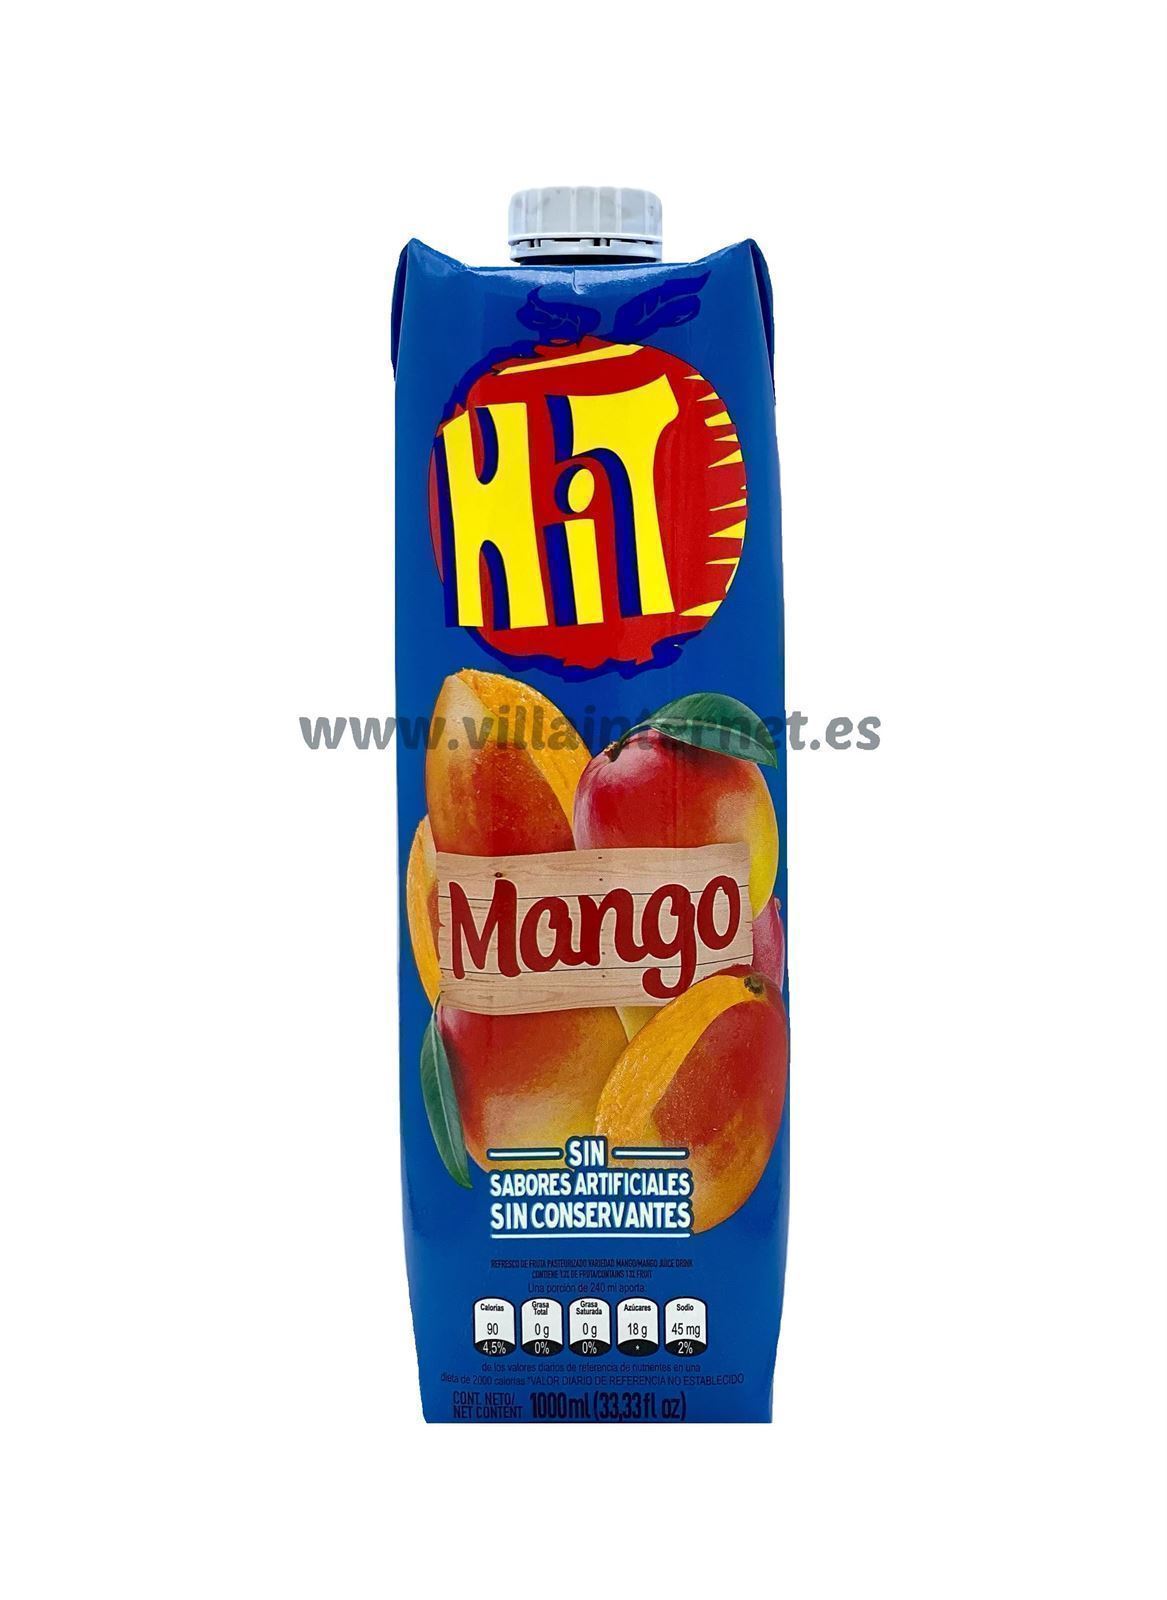 Hit sabor mango 1L - Imagen 1